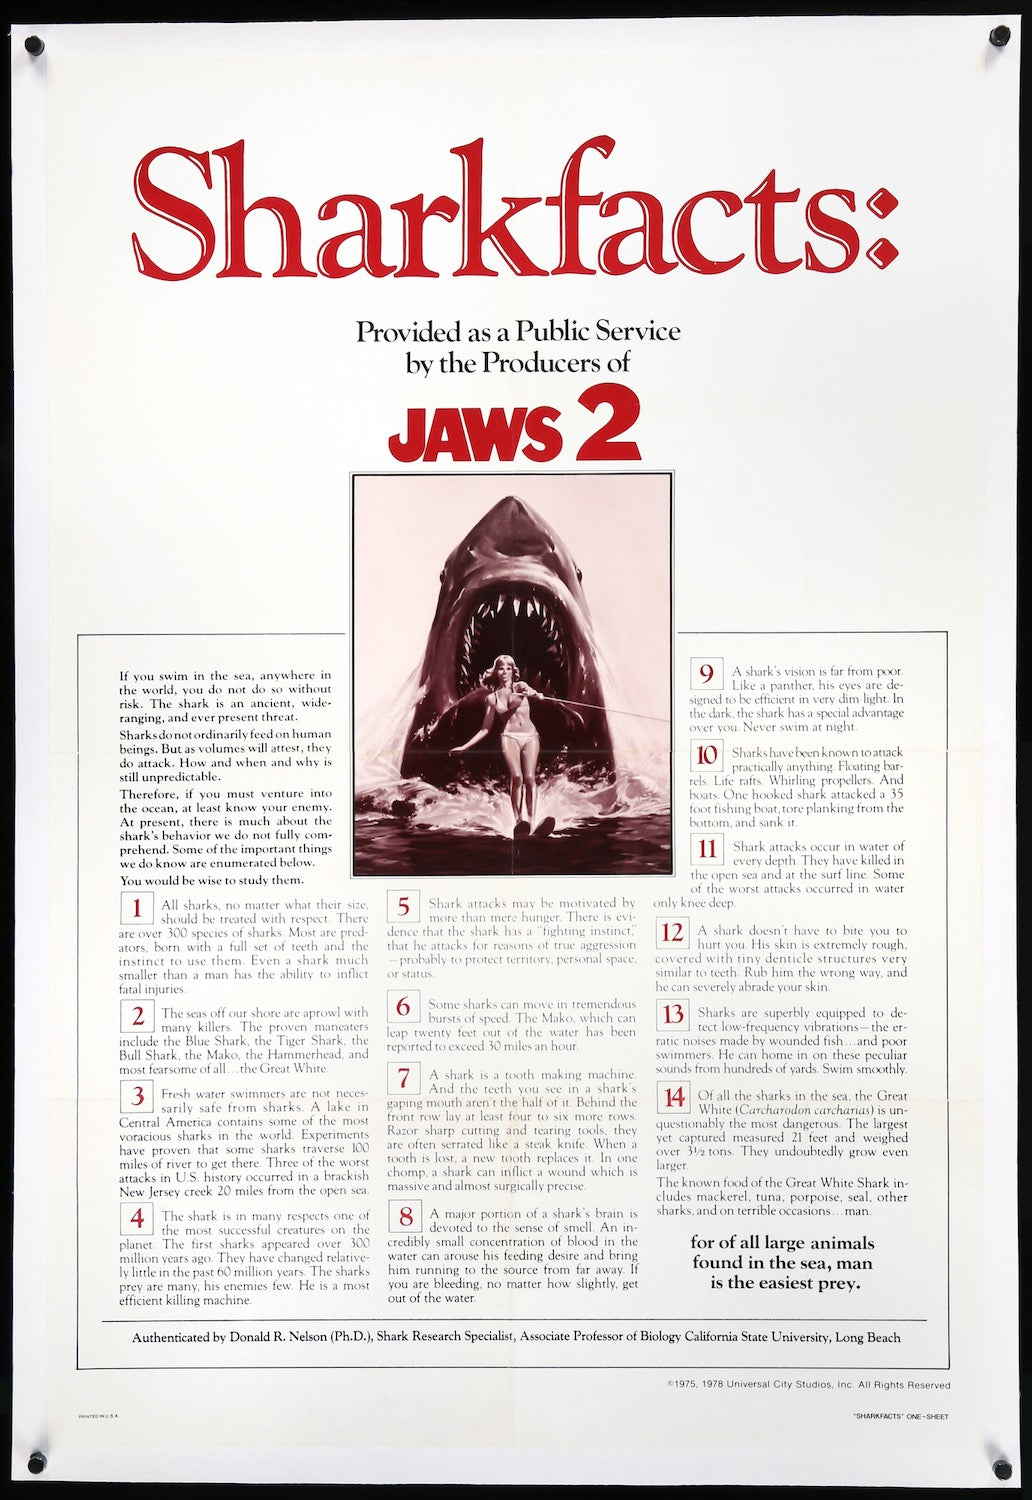 Jaws 2 (1978) original movie poster for sale at Original Film Art